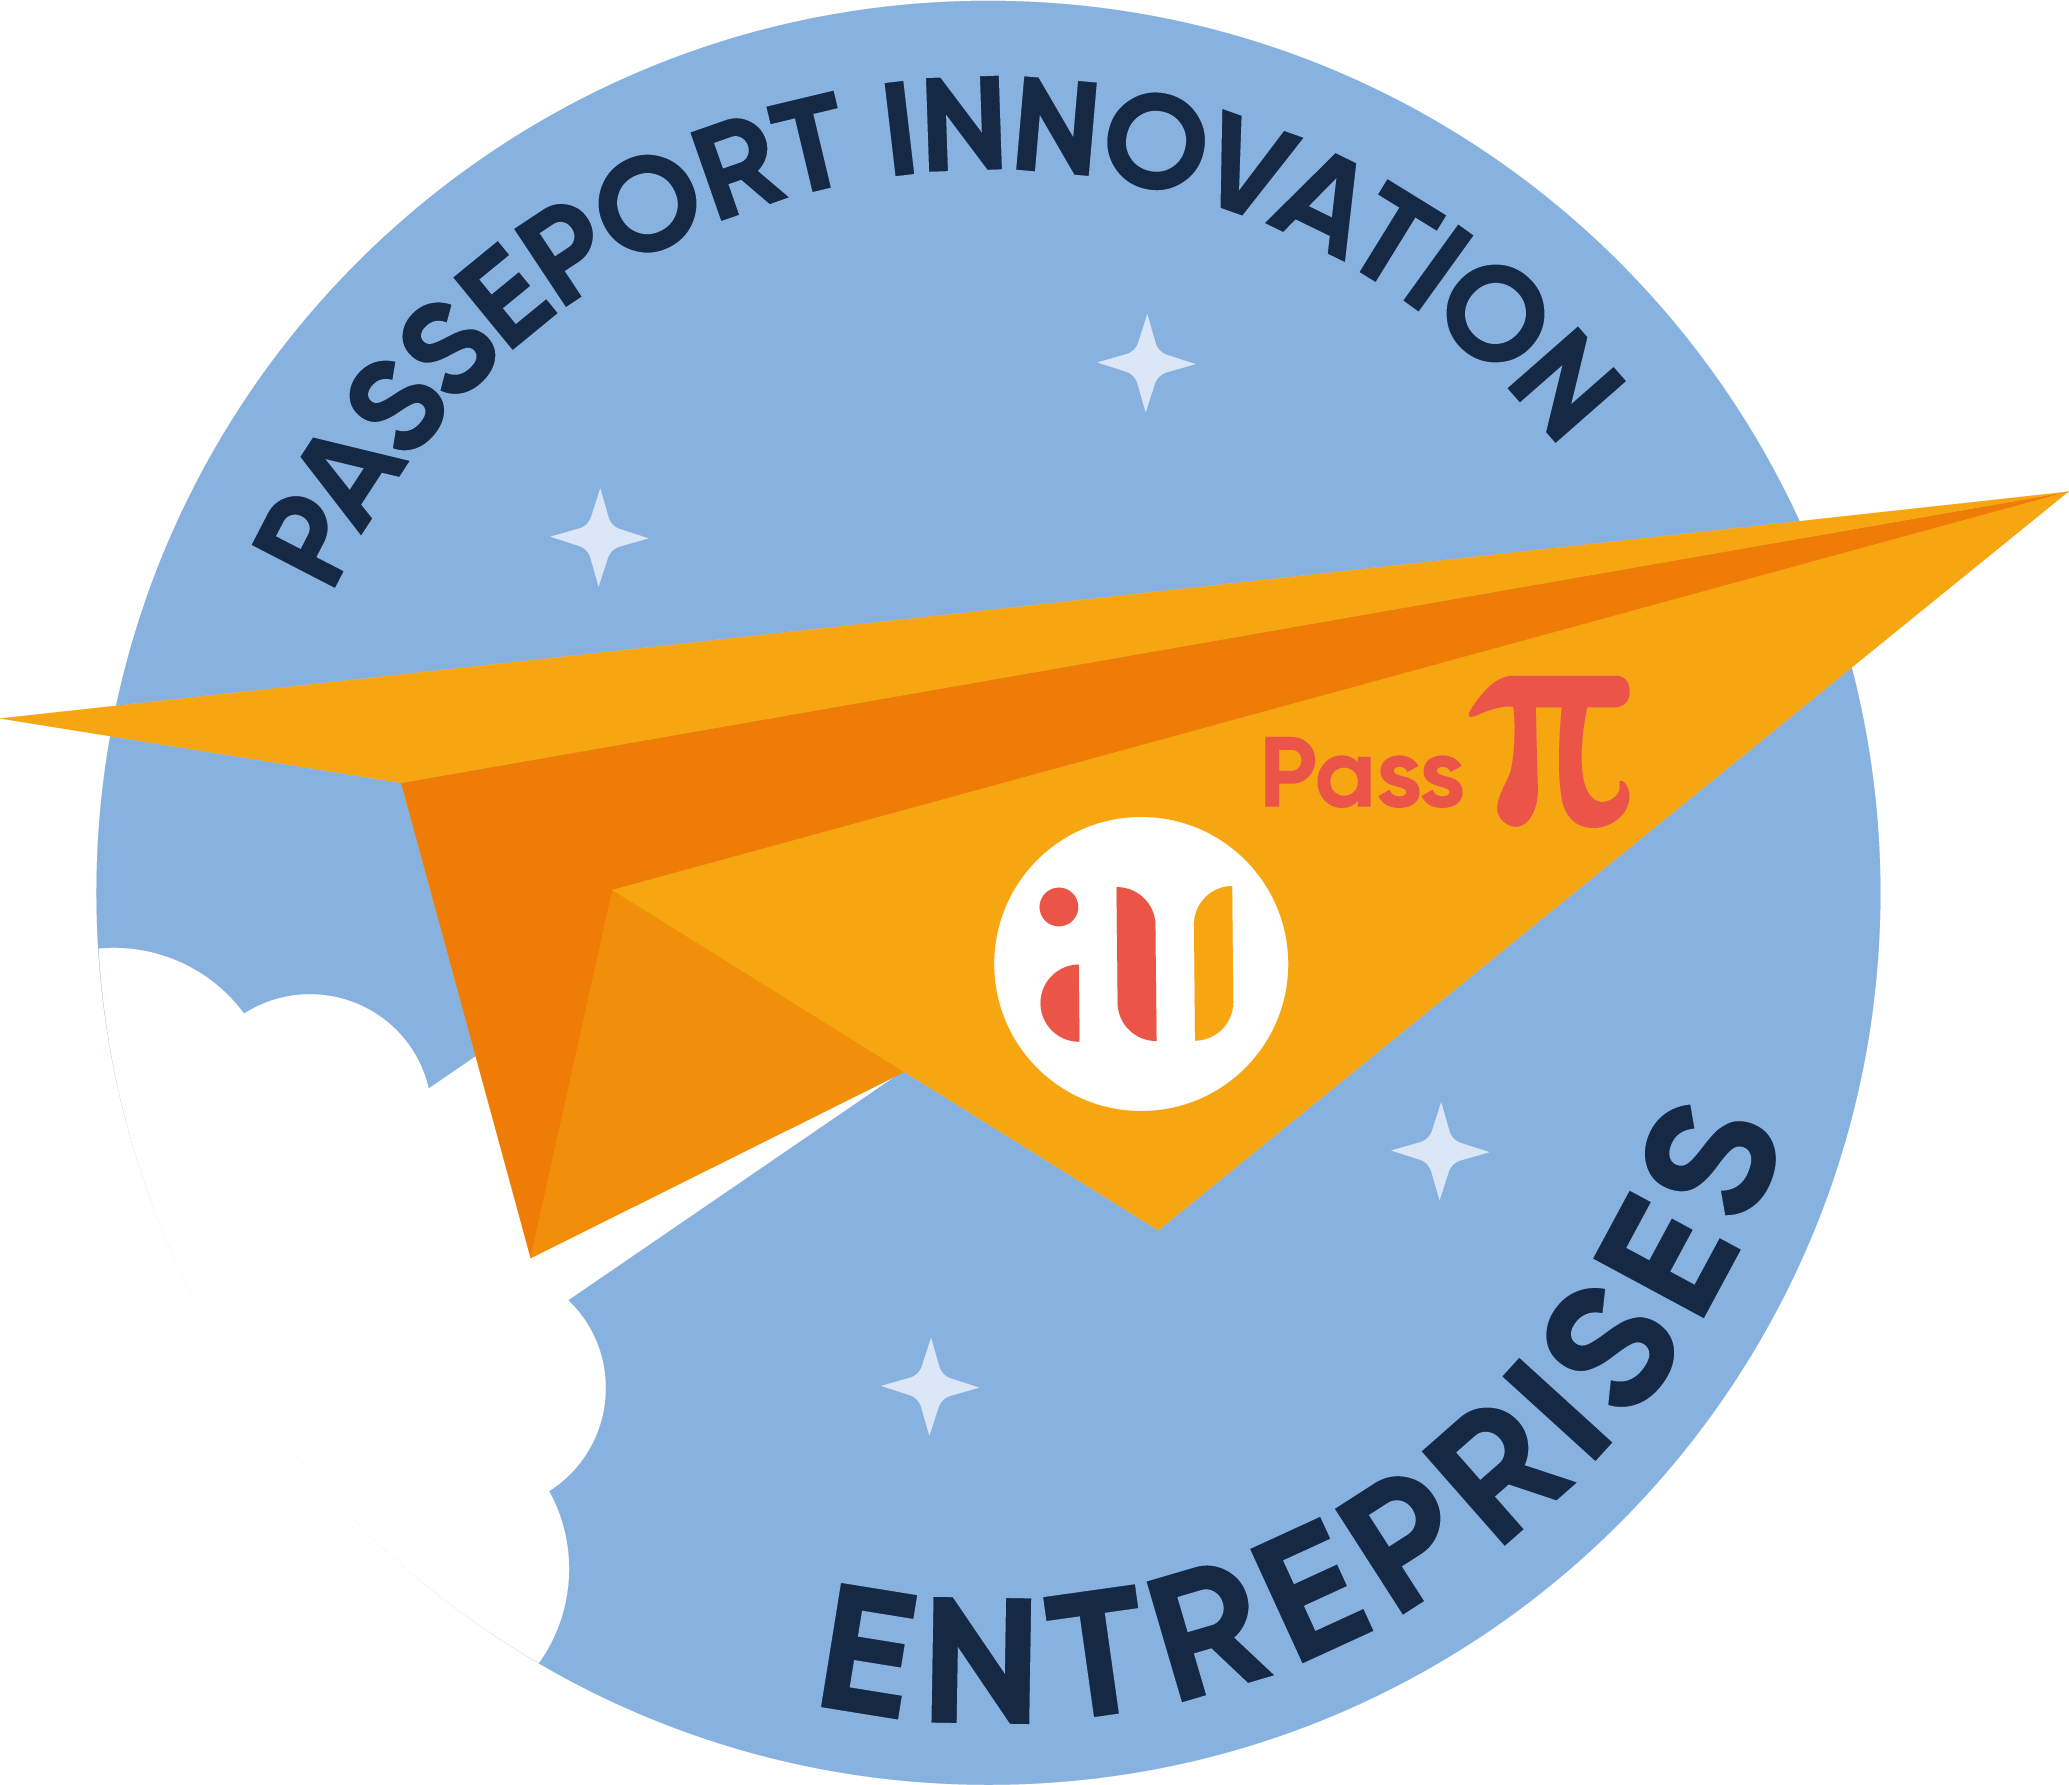 Business Innovation Passport scheme